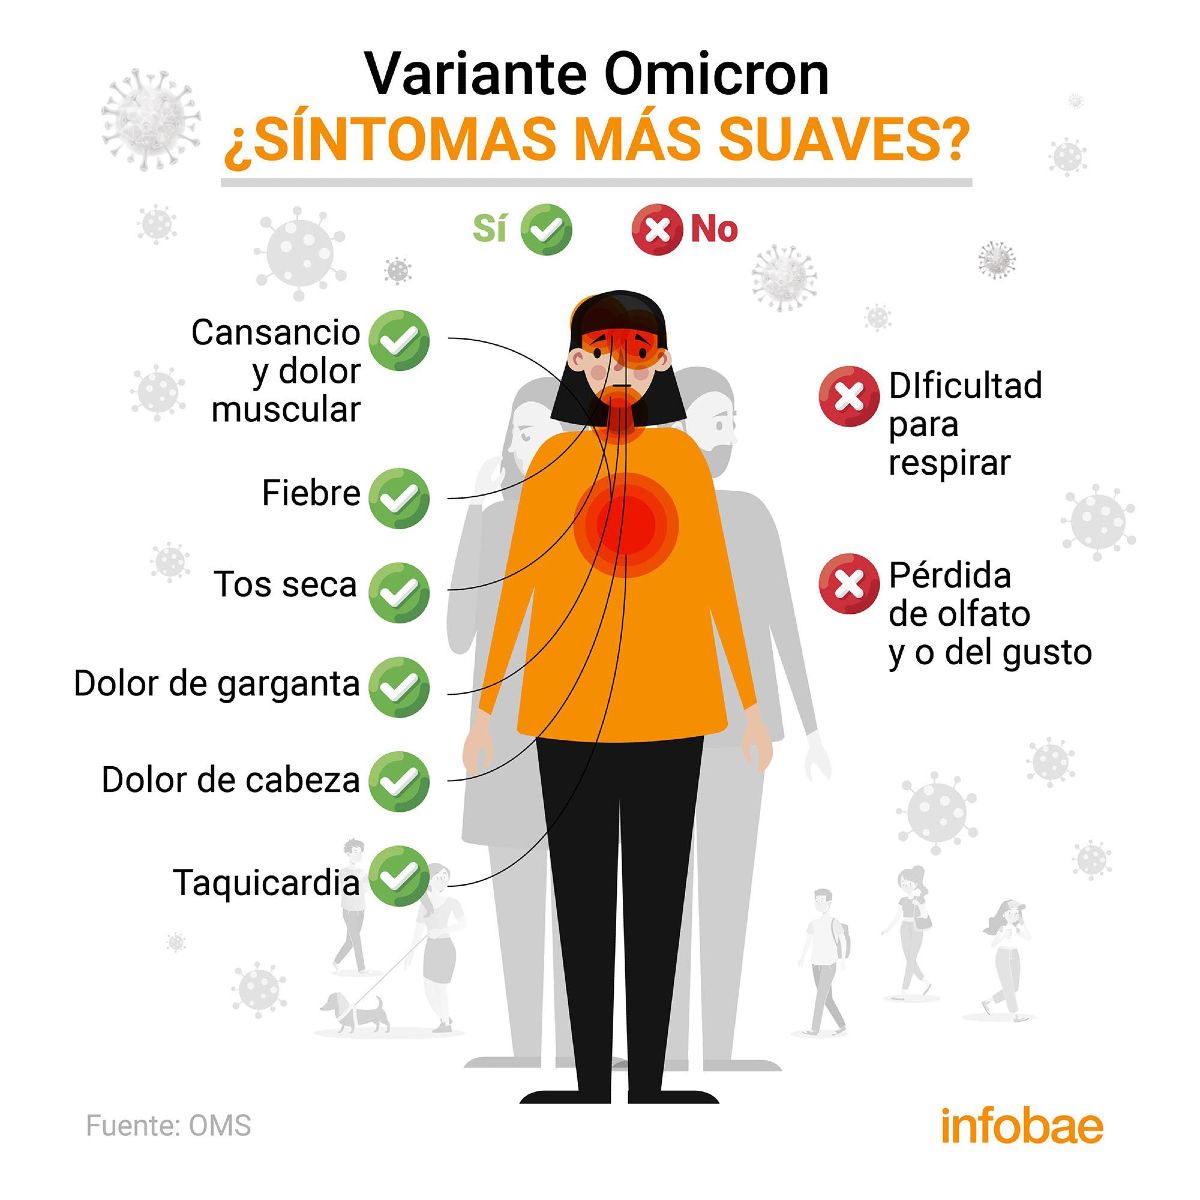 Variante Ómicron de coronavirus: cuáles son sus síntomas